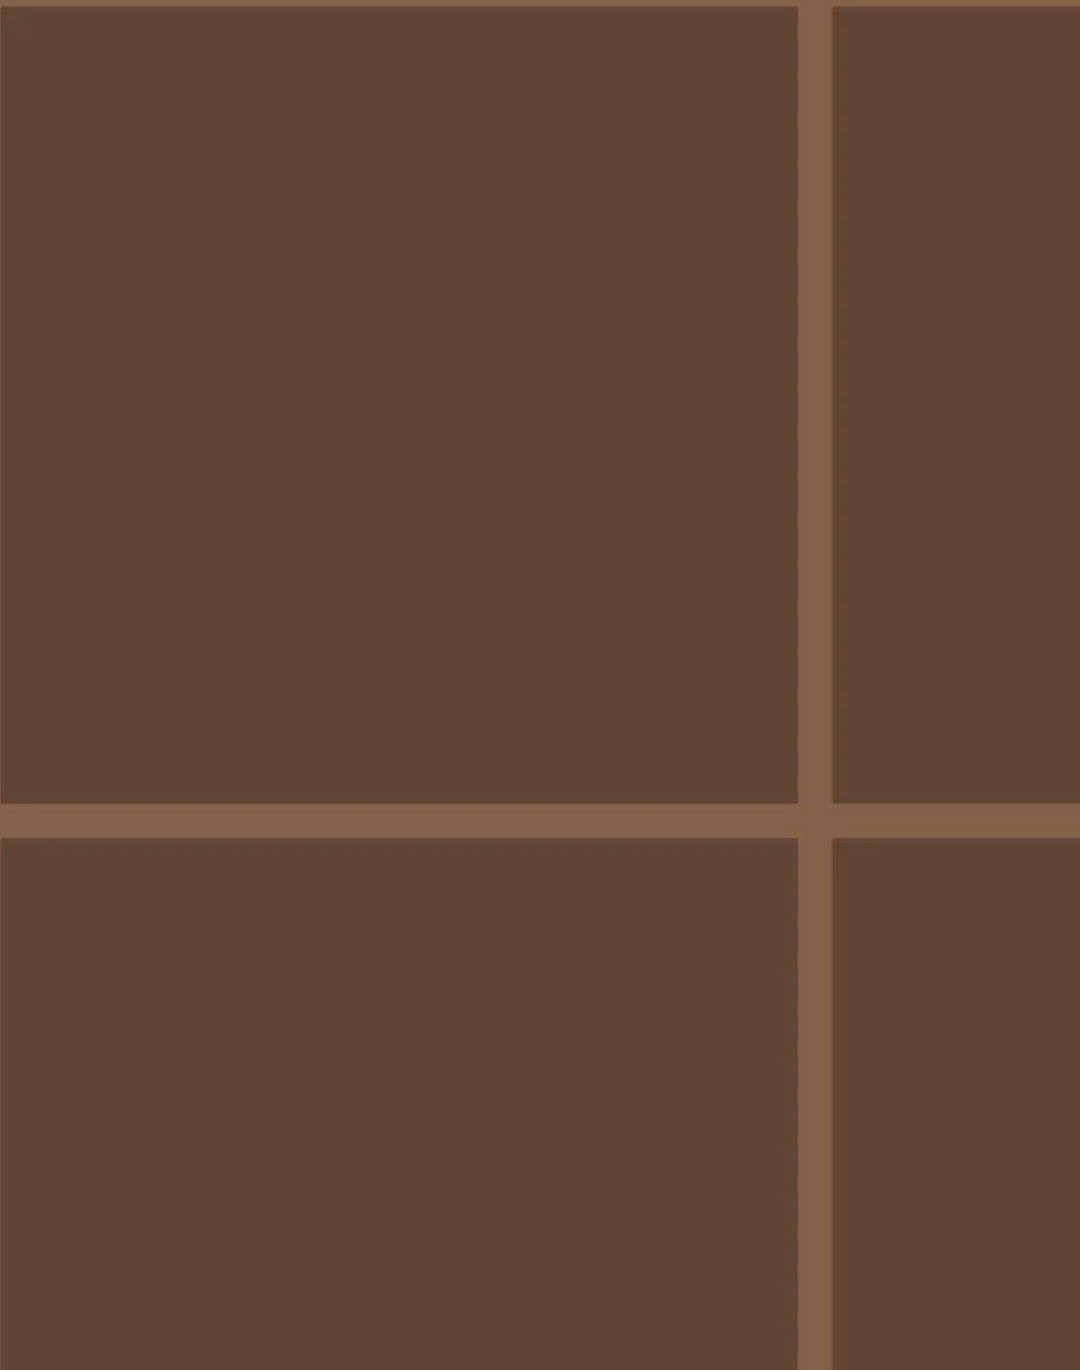 Grid - Large Bold, Line: Light Brown | Background: Brown